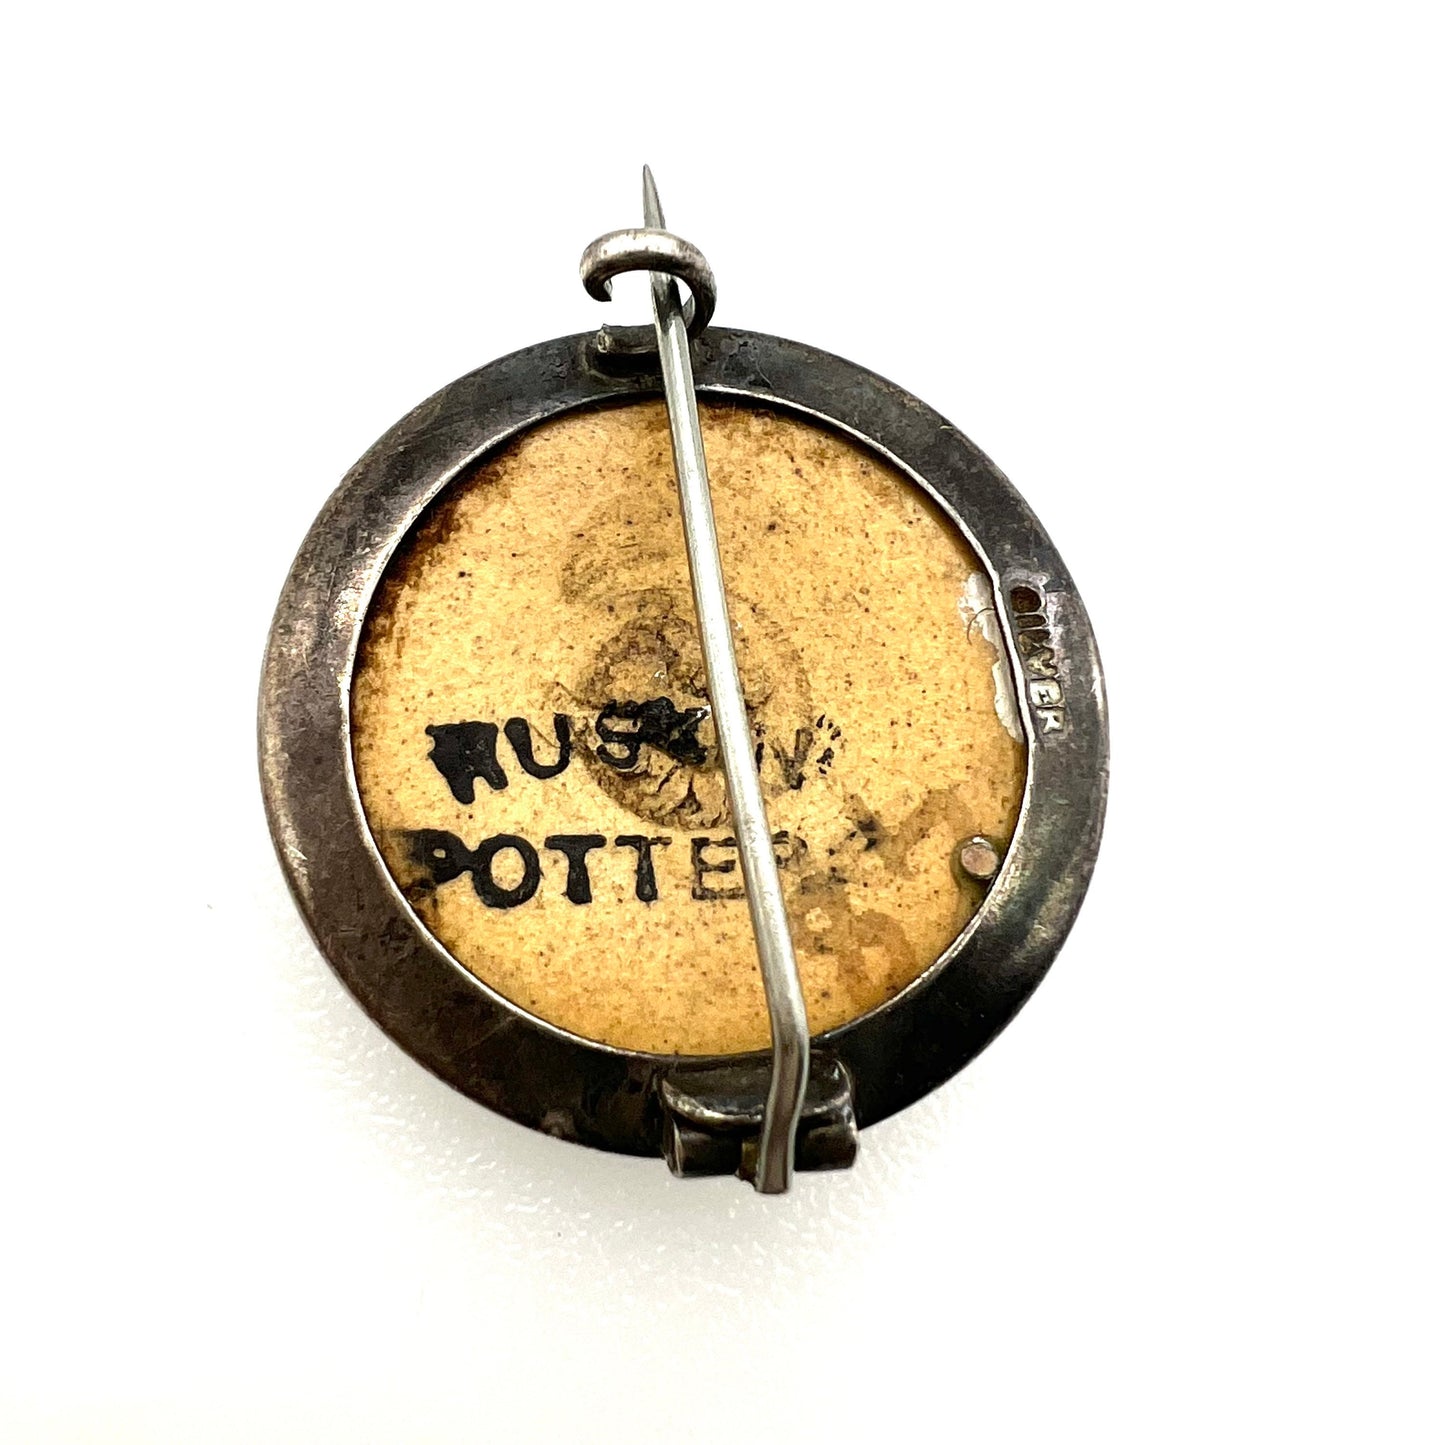 Ruskin Pottery Silver Roundel Brooch